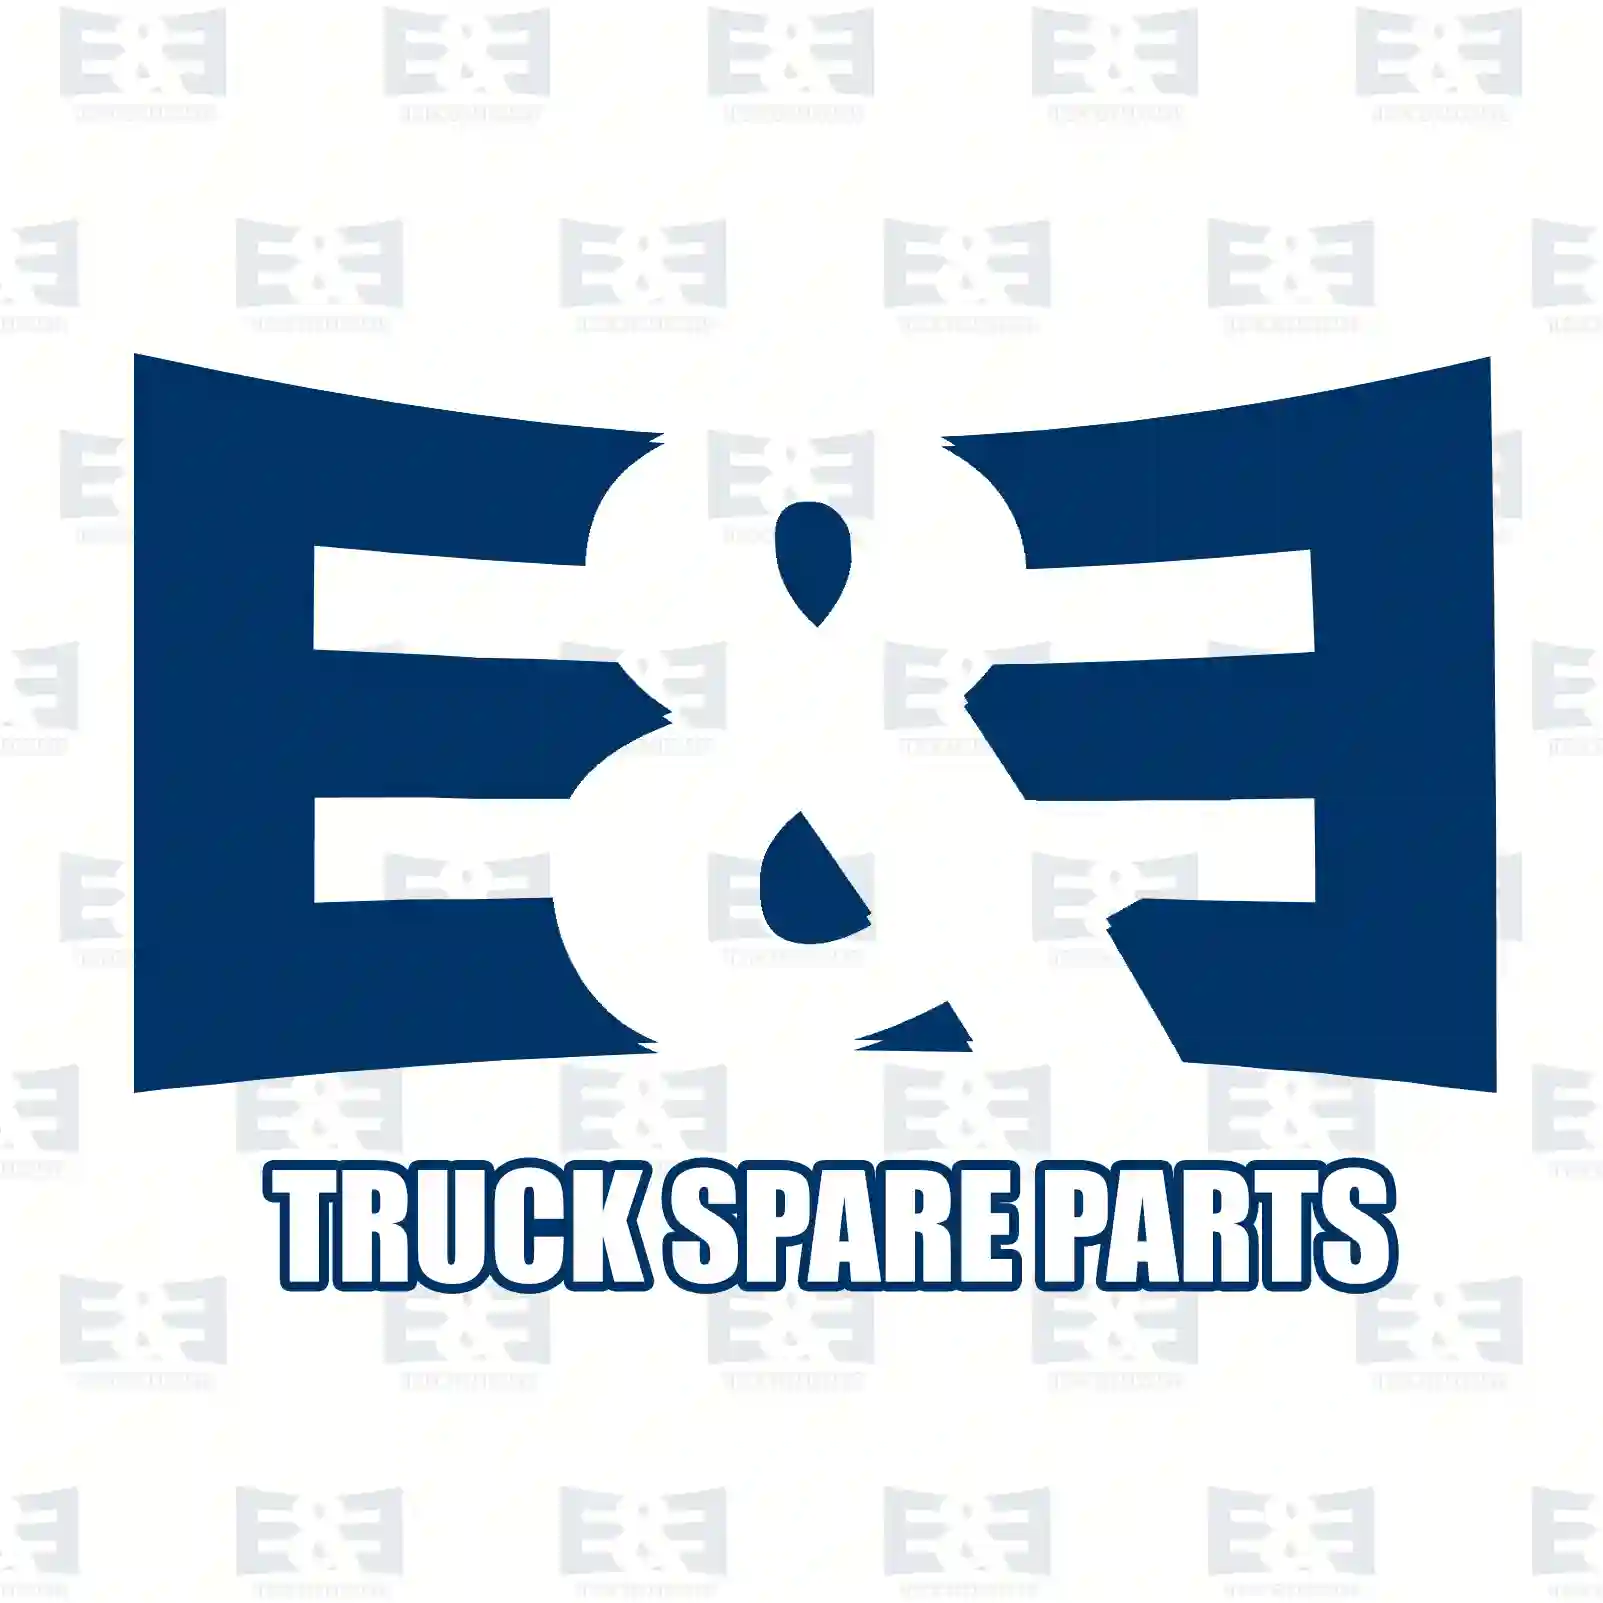 Drum brake lining kit, axle kit - oversize, 2E2295395, 81502216102S, 3054230310, 3054230910, 6174230130, 6174230630, 6174233311, 6174235610, 6174235611, 6174235910, 6594231310, 6594232810, 6594233610, MBLK2210 ||  2E2295395 E&E Truck Spare Parts | Truck Spare Parts, Auotomotive Spare Parts Drum brake lining kit, axle kit - oversize, 2E2295395, 81502216102S, 3054230310, 3054230910, 6174230130, 6174230630, 6174233311, 6174235610, 6174235611, 6174235910, 6594231310, 6594232810, 6594233610, MBLK2210 ||  2E2295395 E&E Truck Spare Parts | Truck Spare Parts, Auotomotive Spare Parts